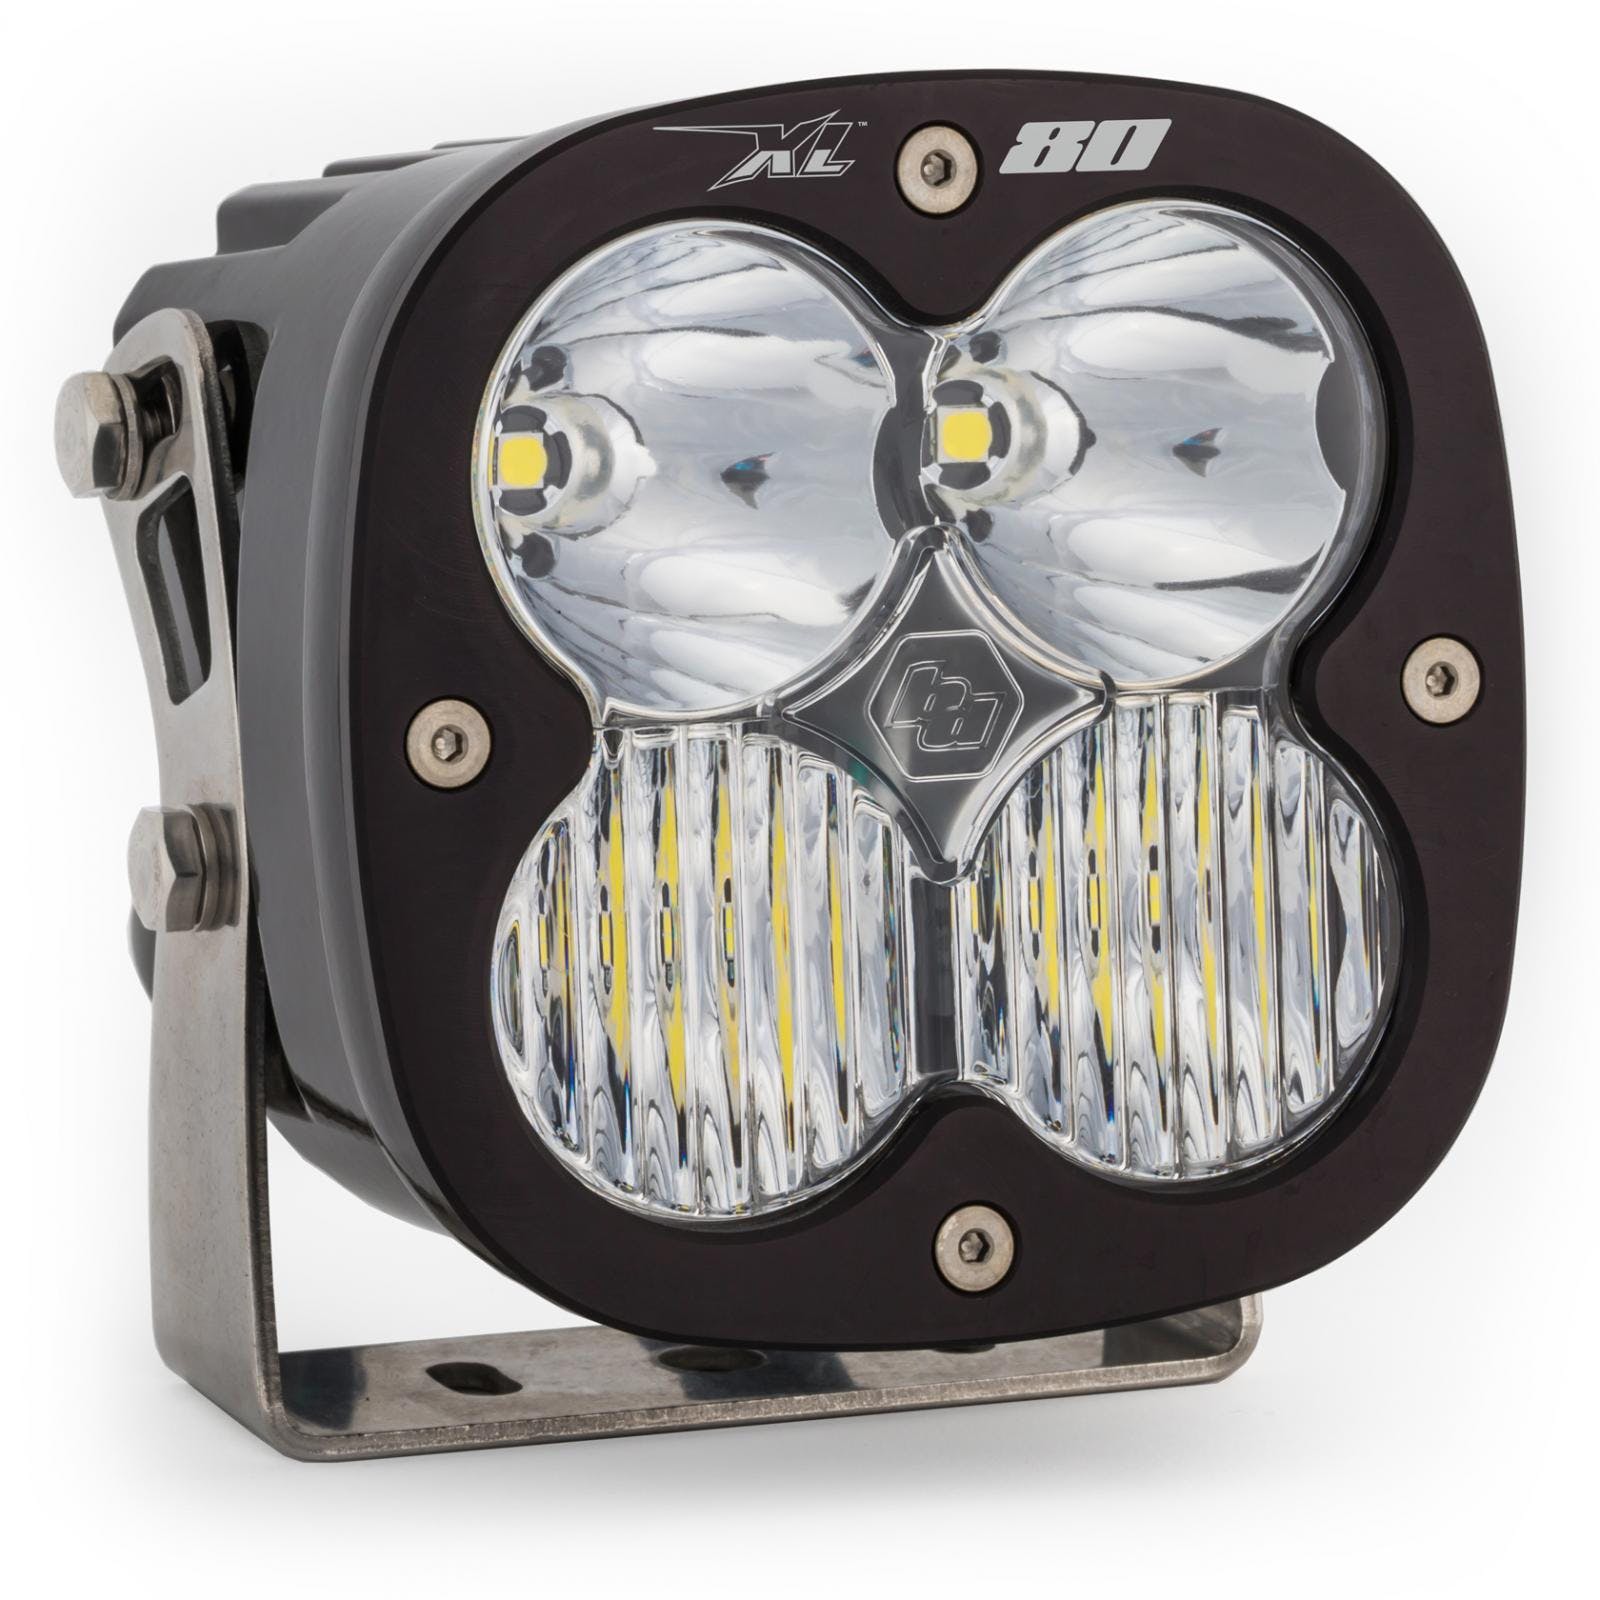 Baja Designs 670003 LED Light Pods Clear Lens Spot Each XL80 Driving/Combo